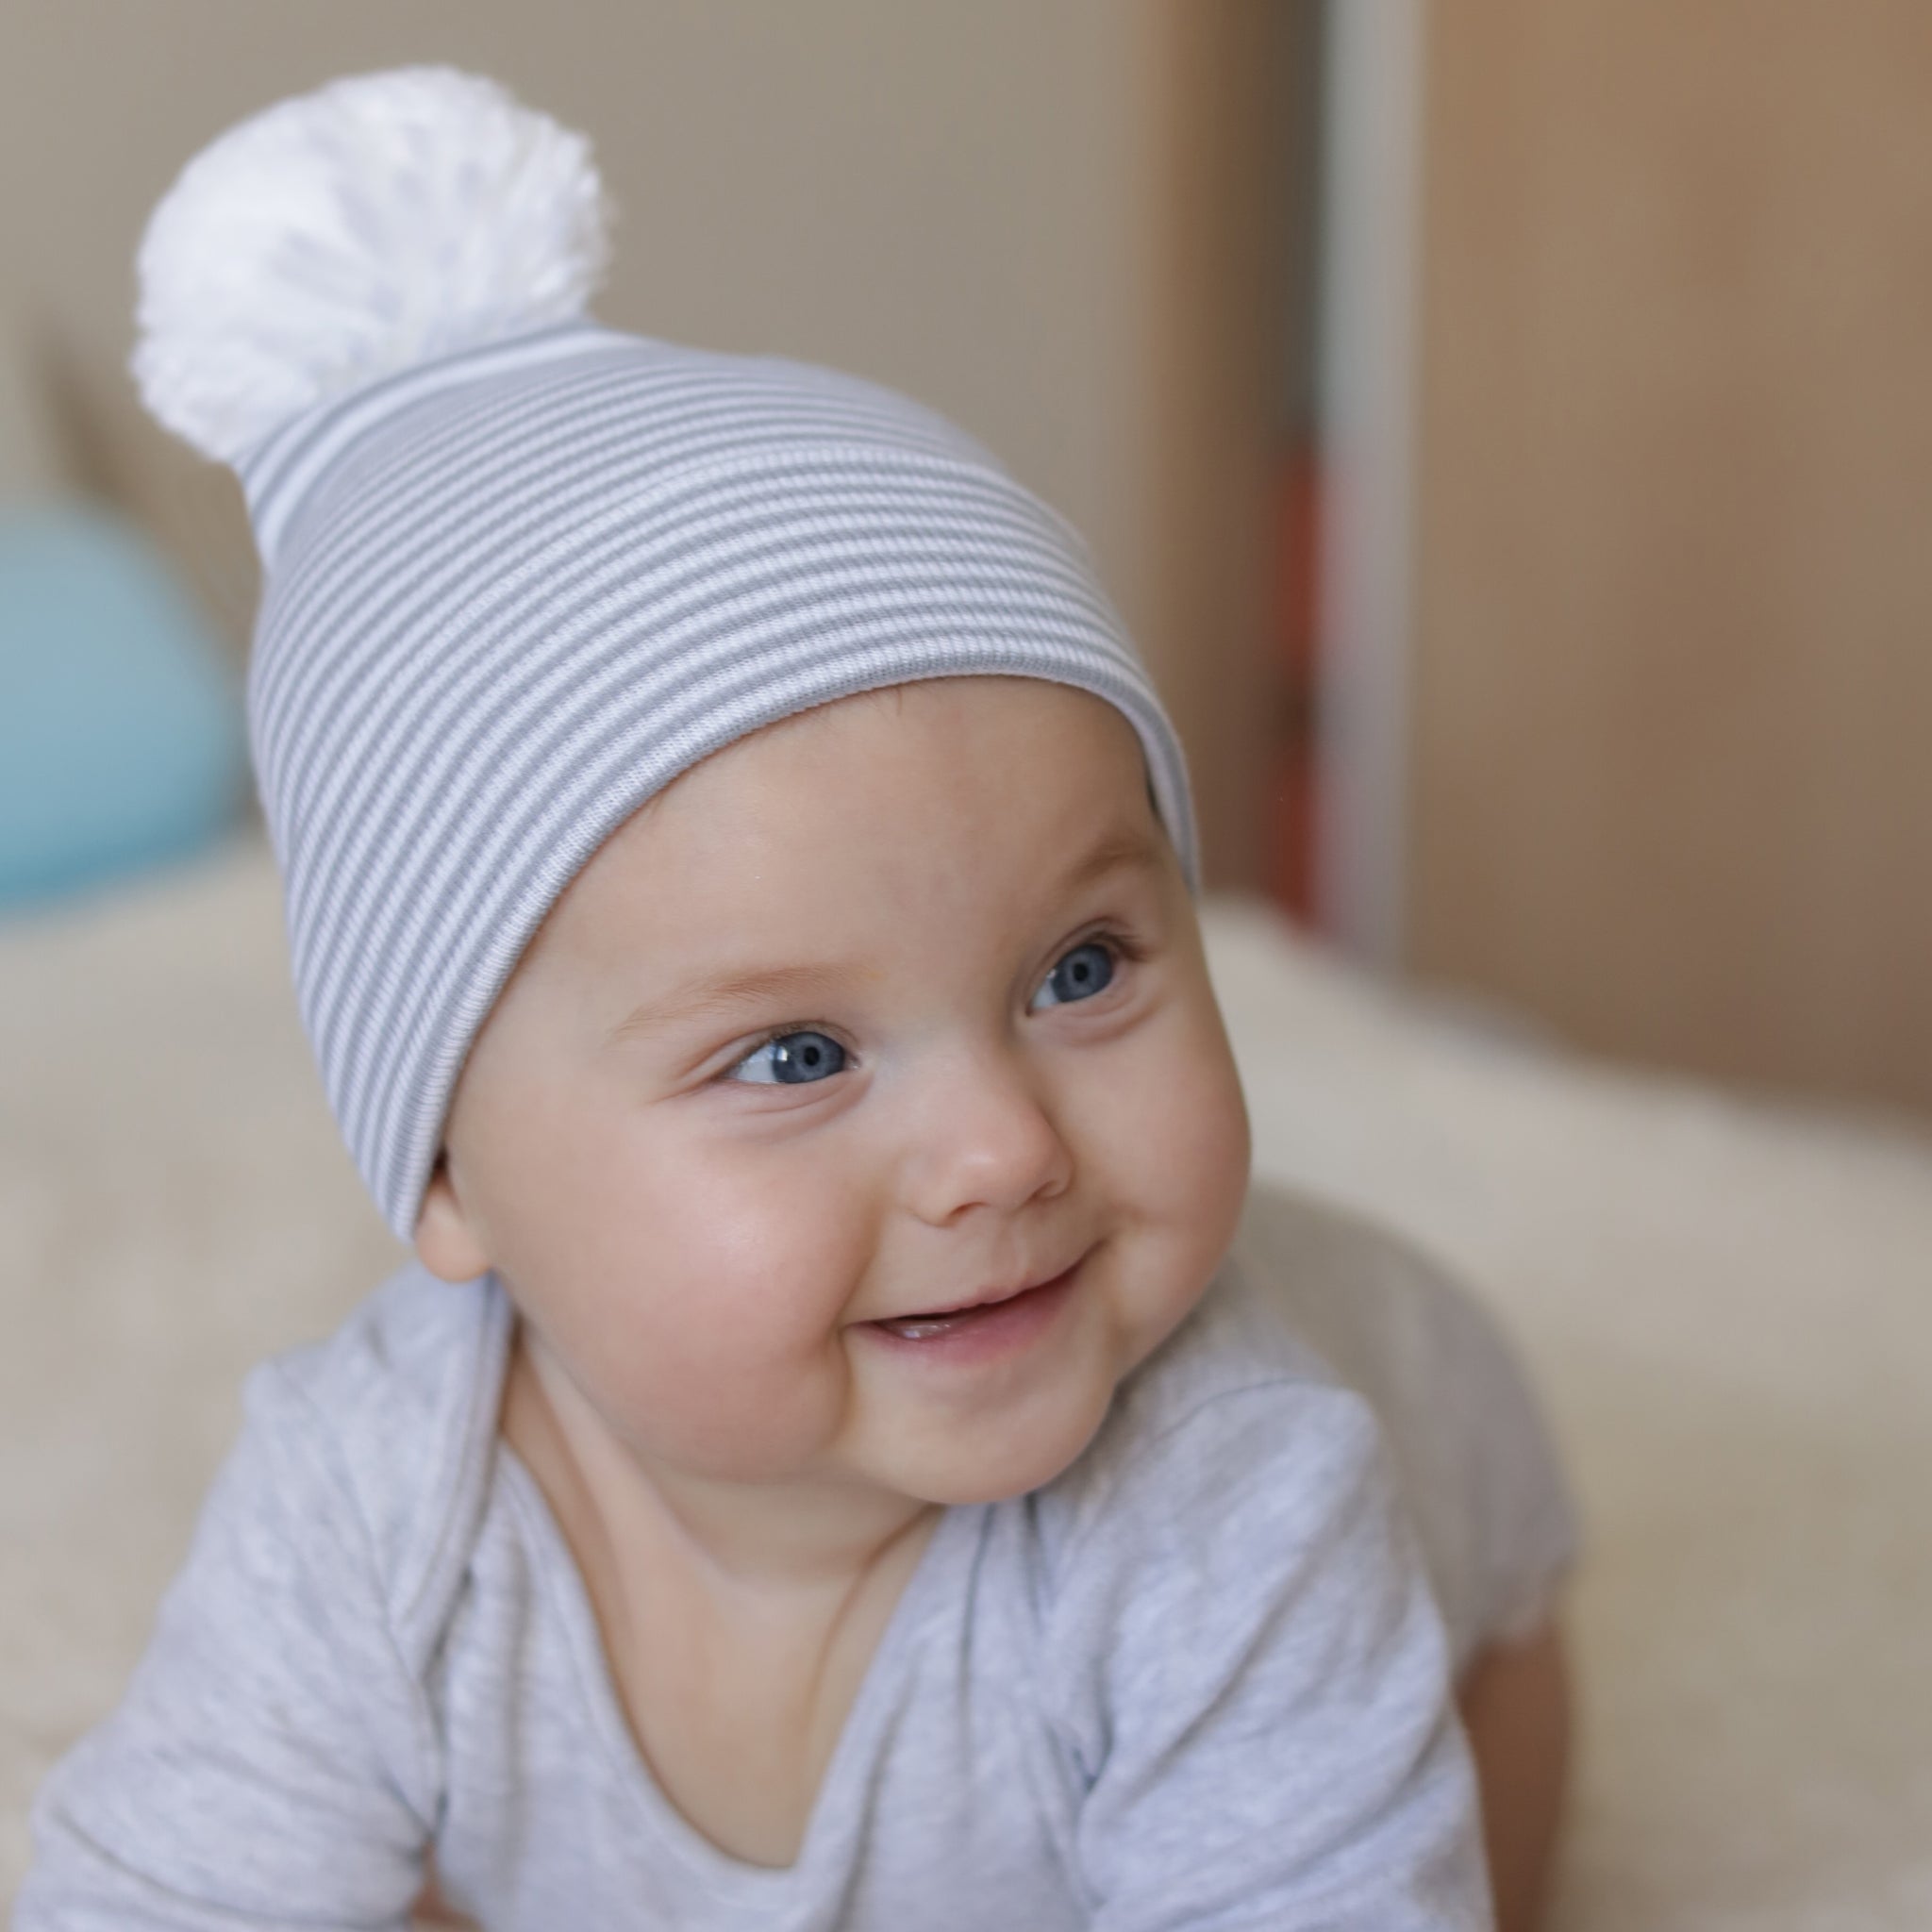 ilybean Striped Gray and White with White Pom Pom Newborn Boy Hospital Hat - Personalization Optional